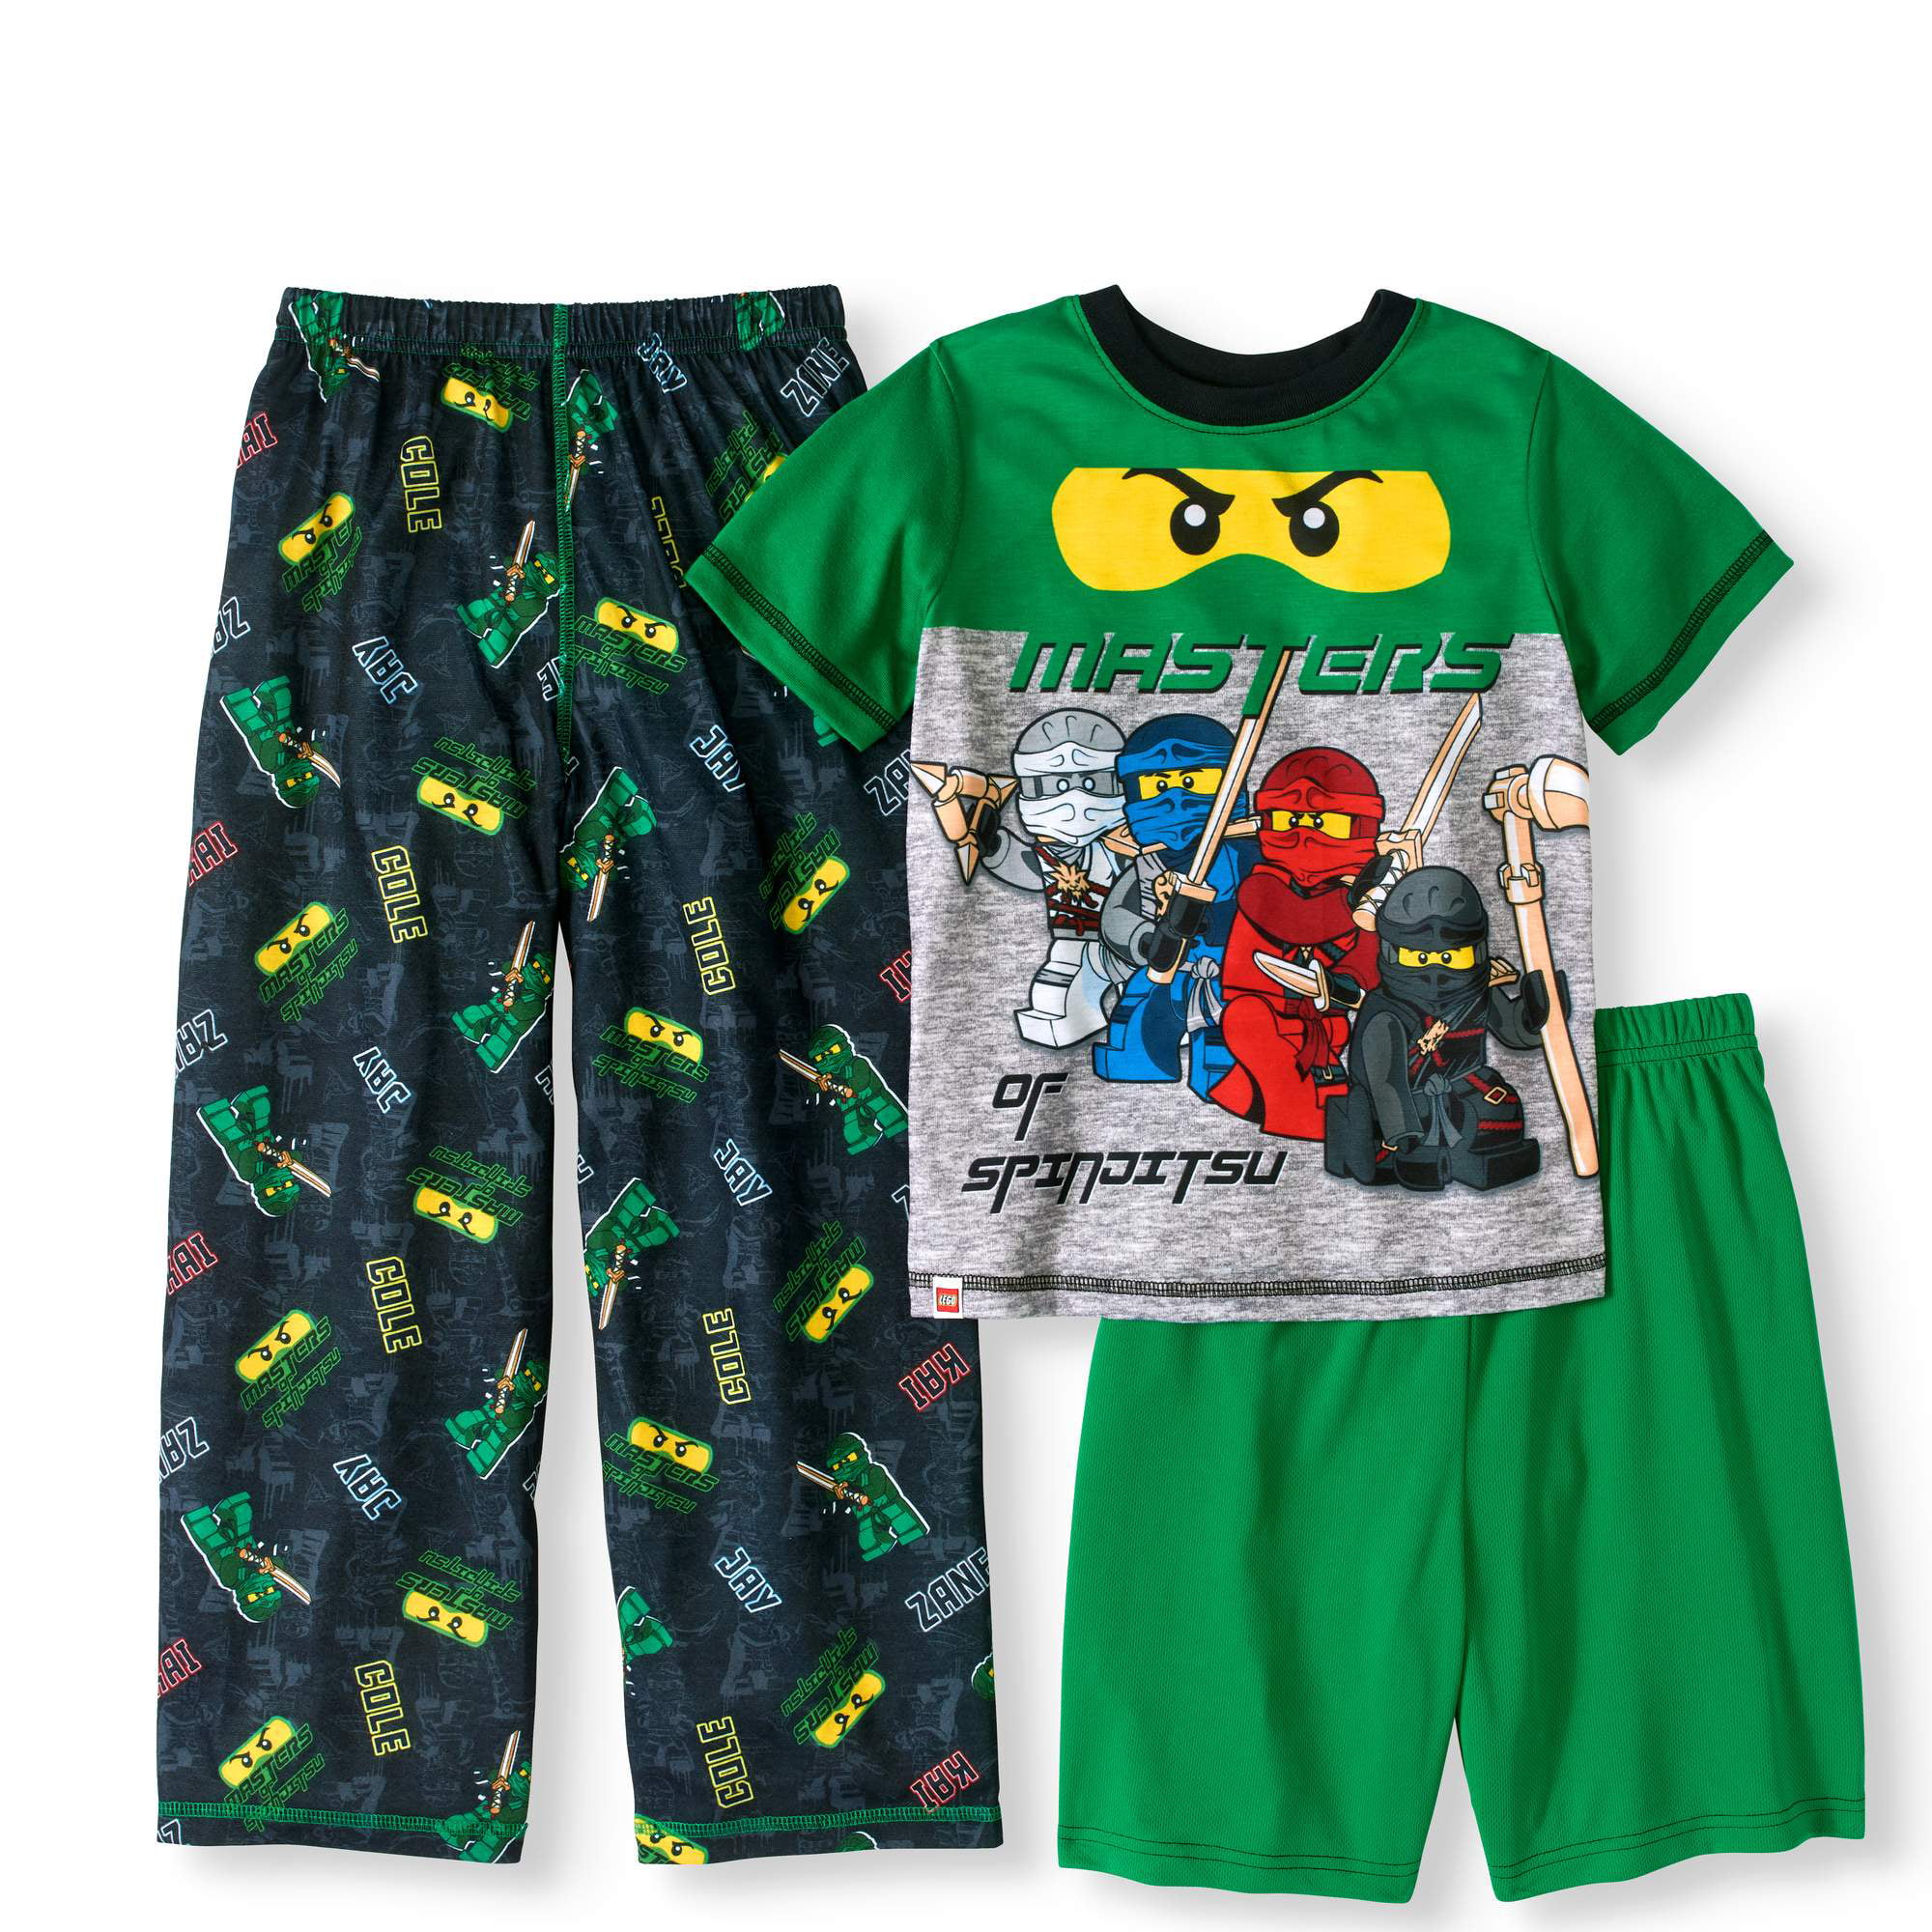 Boys Lego Ninjago Pyjama Set 2 Piece Cotton Character PJs Nightwear 3-4 Yrs NEW